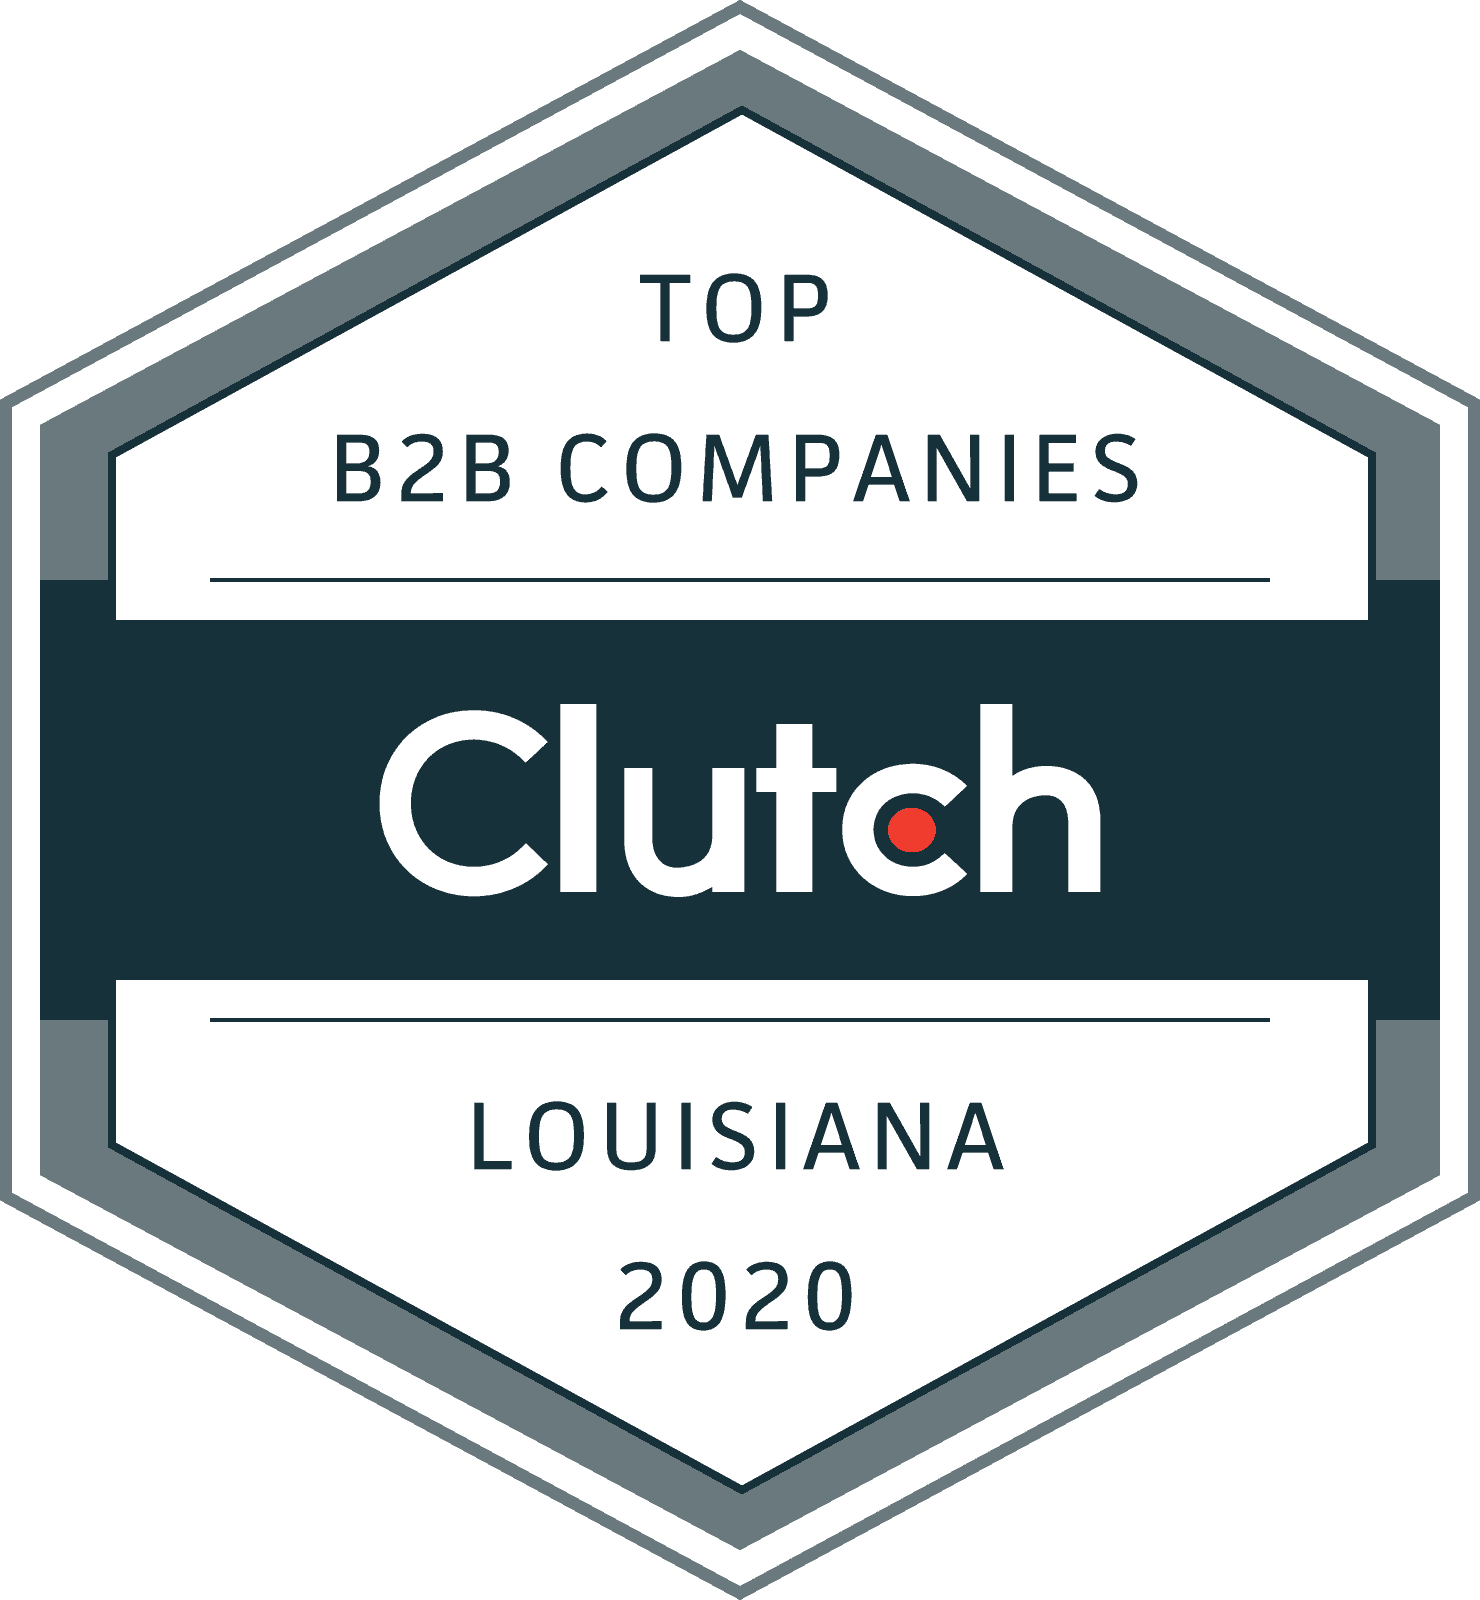 top b2b companies louisiana 2020 clutch